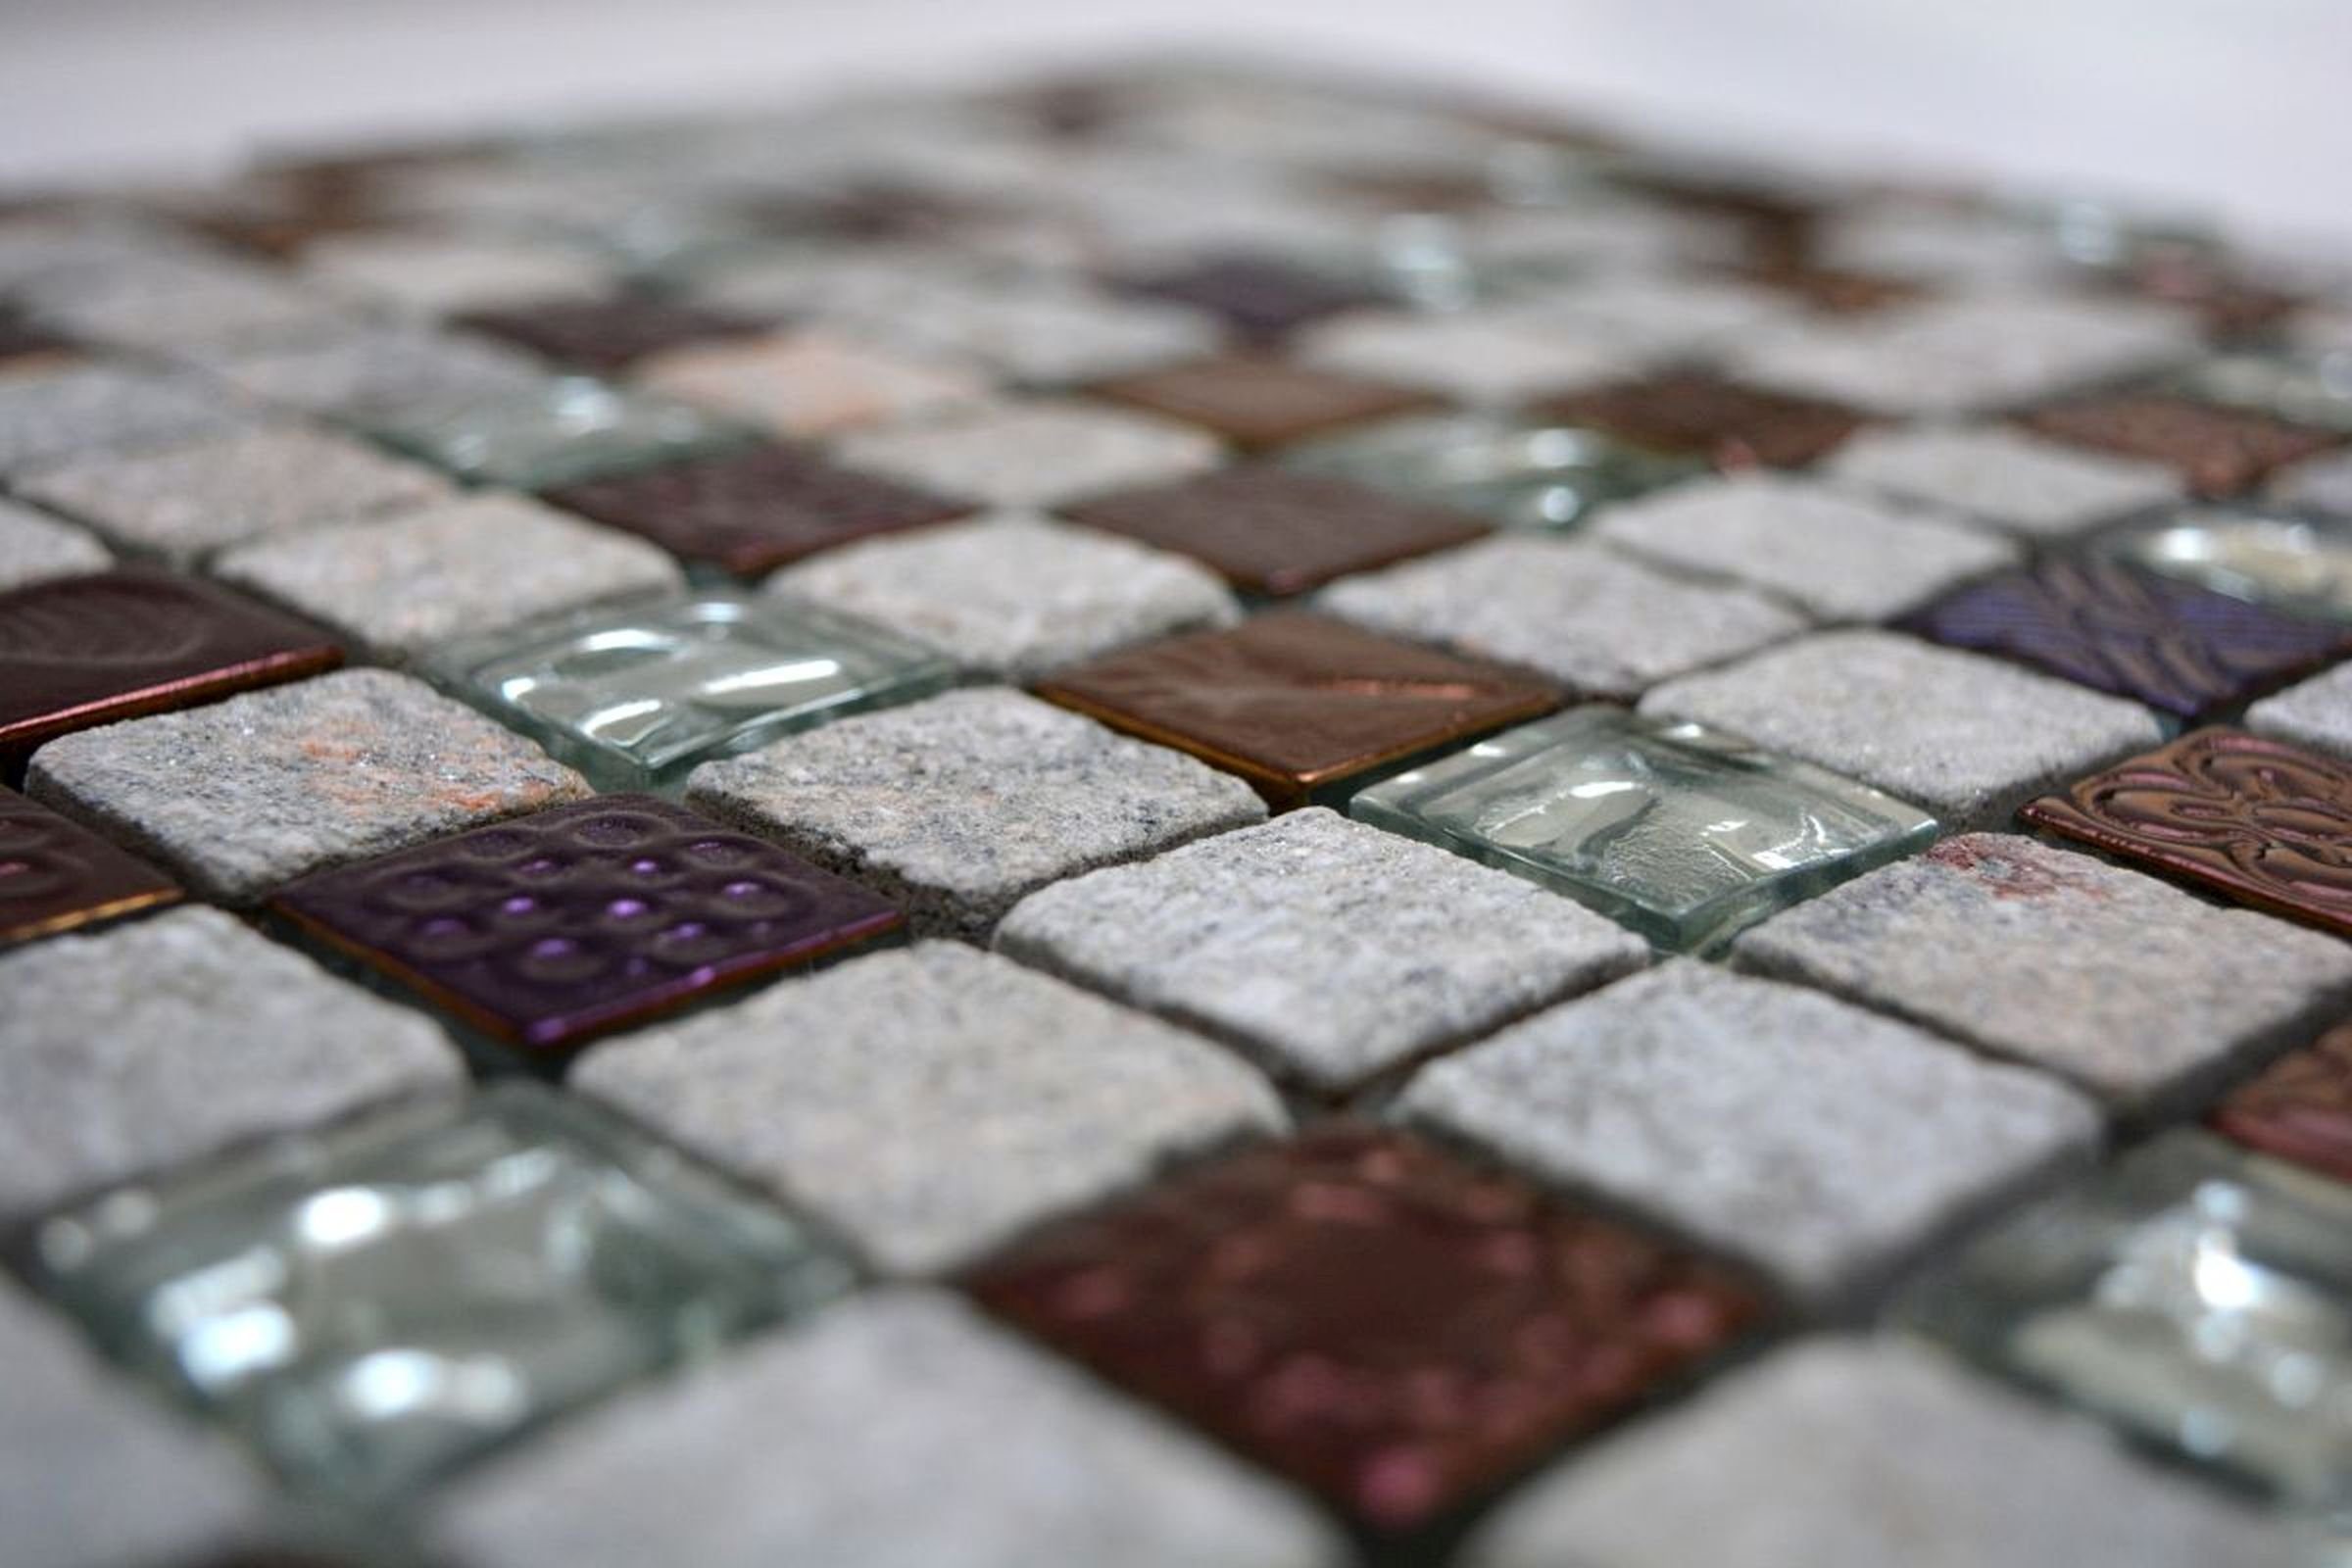 Mosani Mosaikfliesen Rustikal Quarzit Kunststein Mosaikfliese hellgrau silber Glasmosaik